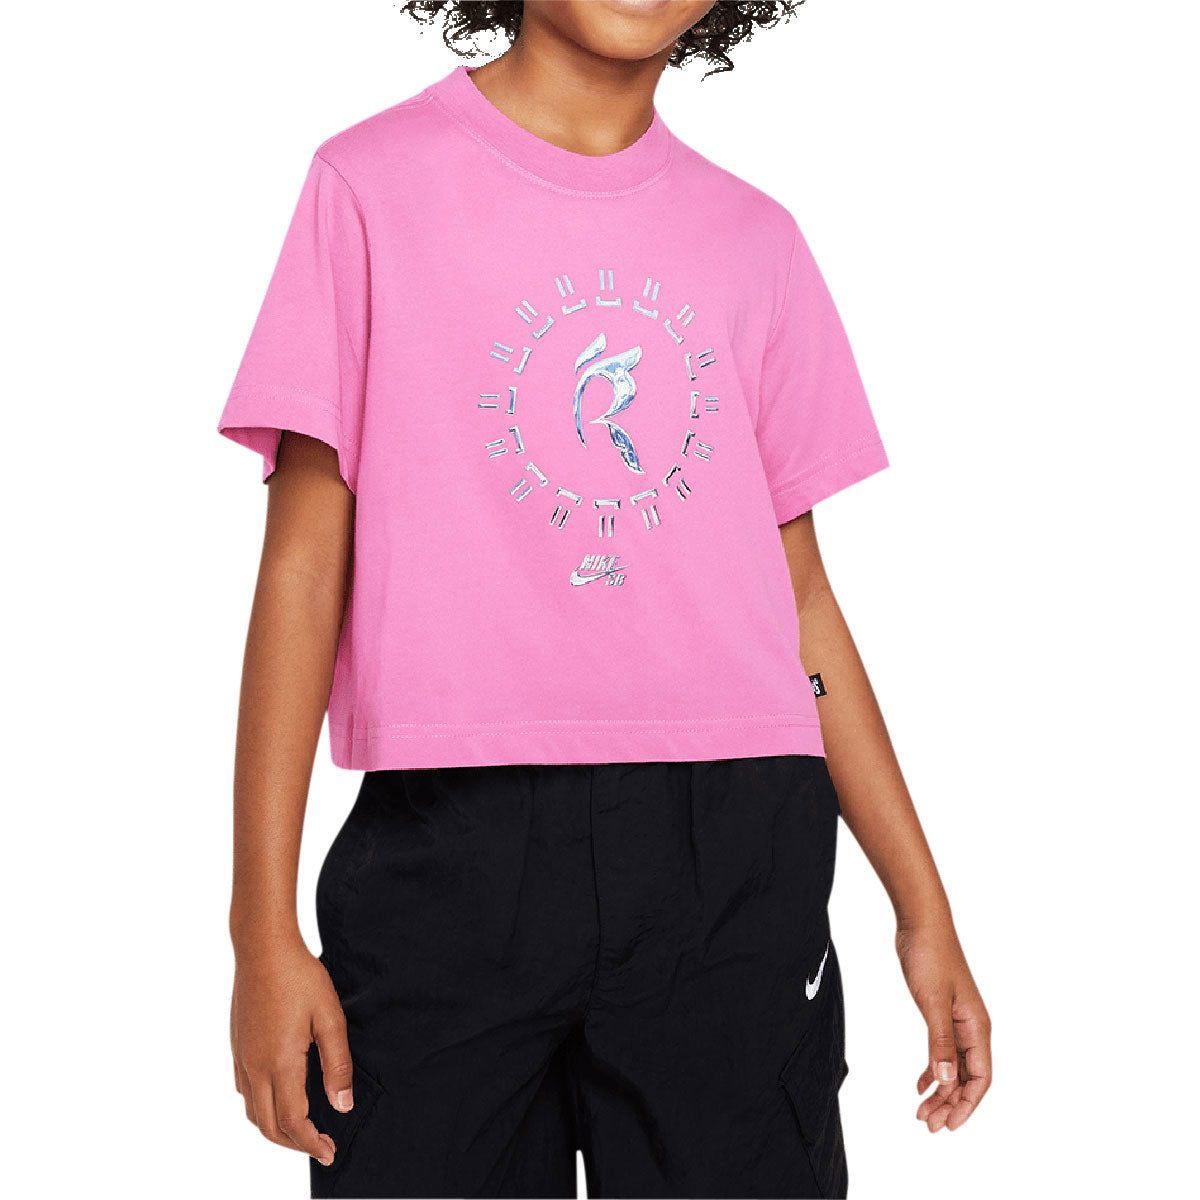 Nike SB Womens x Rayssa Leal T-Shirt - Pinkfire II image 2